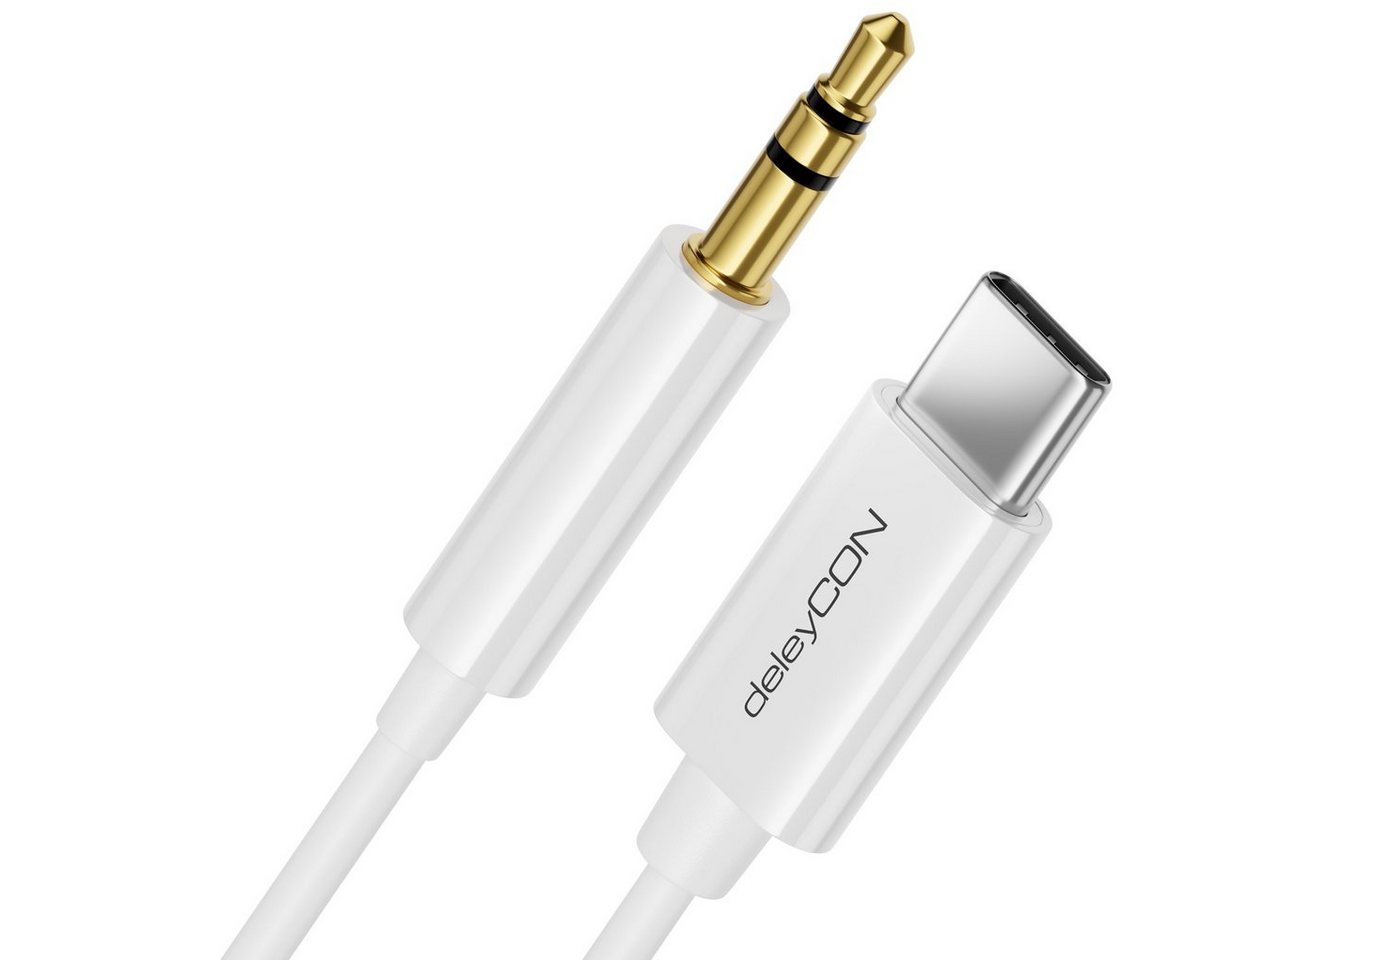 deleyCON deleyCON 2m 3,5mm Klinke auf USB-C Kabel AUX 3,5mm Klinkenkabel Audio USB-Kabel von deleyCON